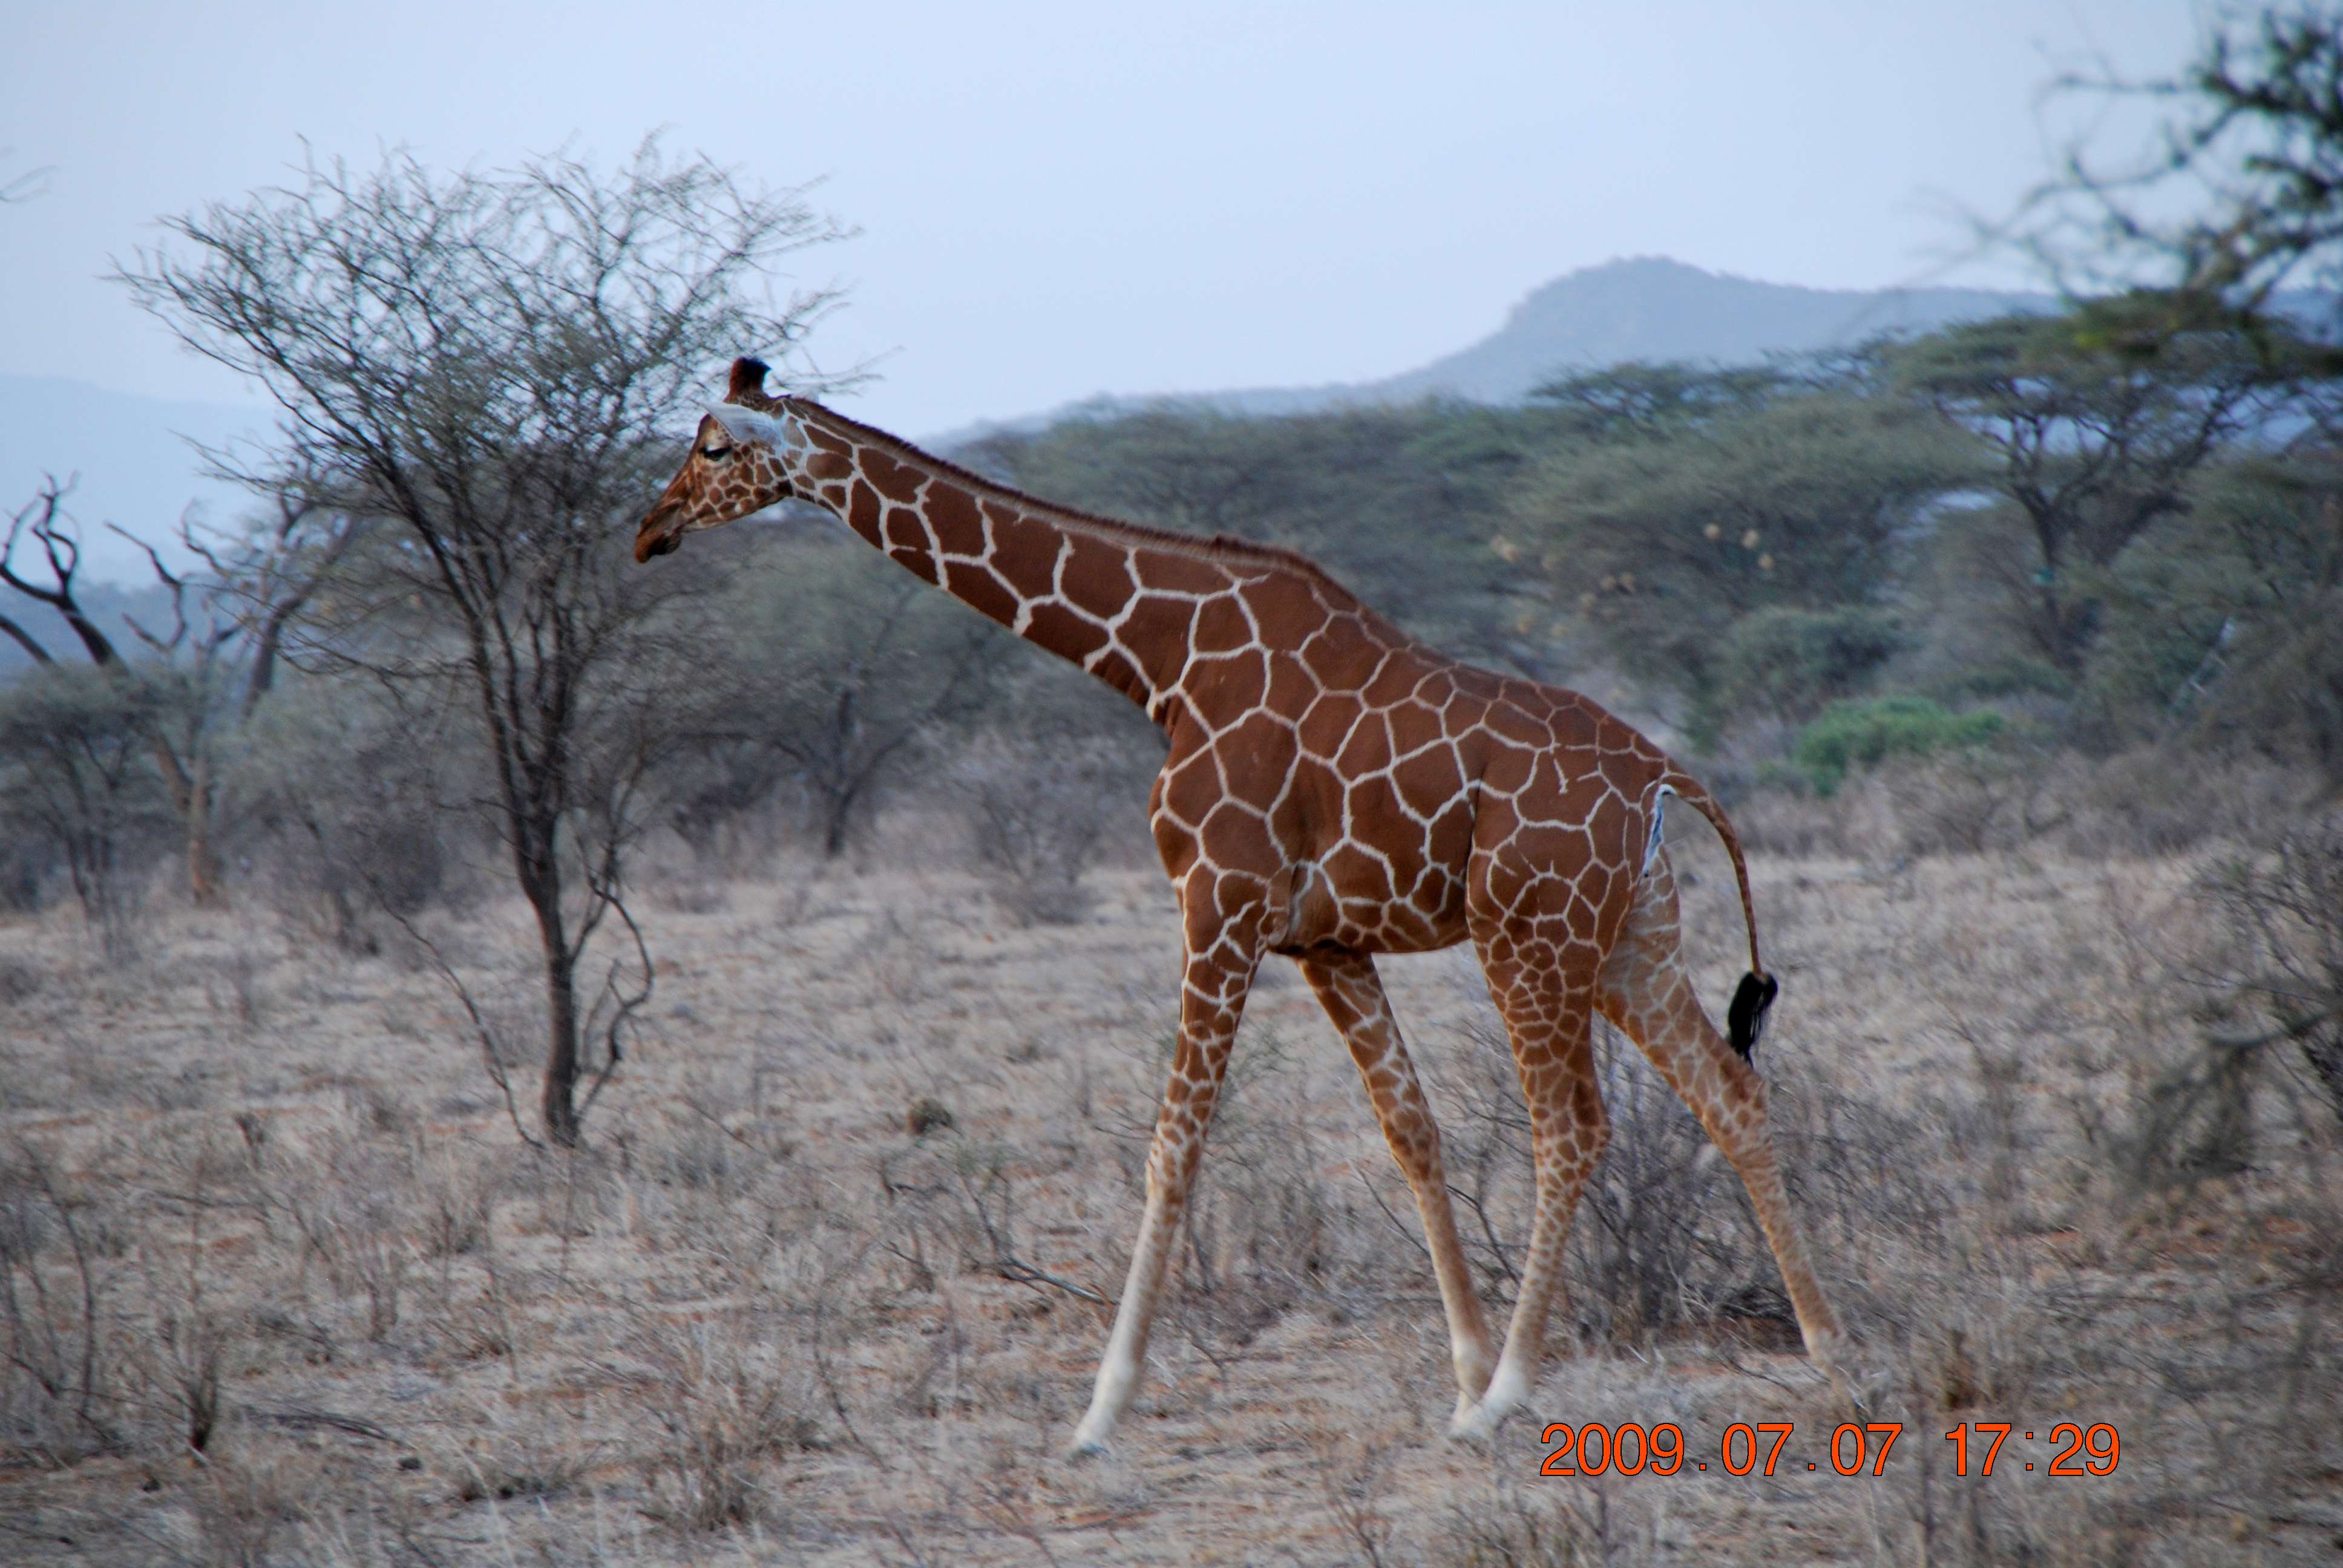 Kenia una experiencia inolvidable - Blogs de Kenia - Samburu (5)